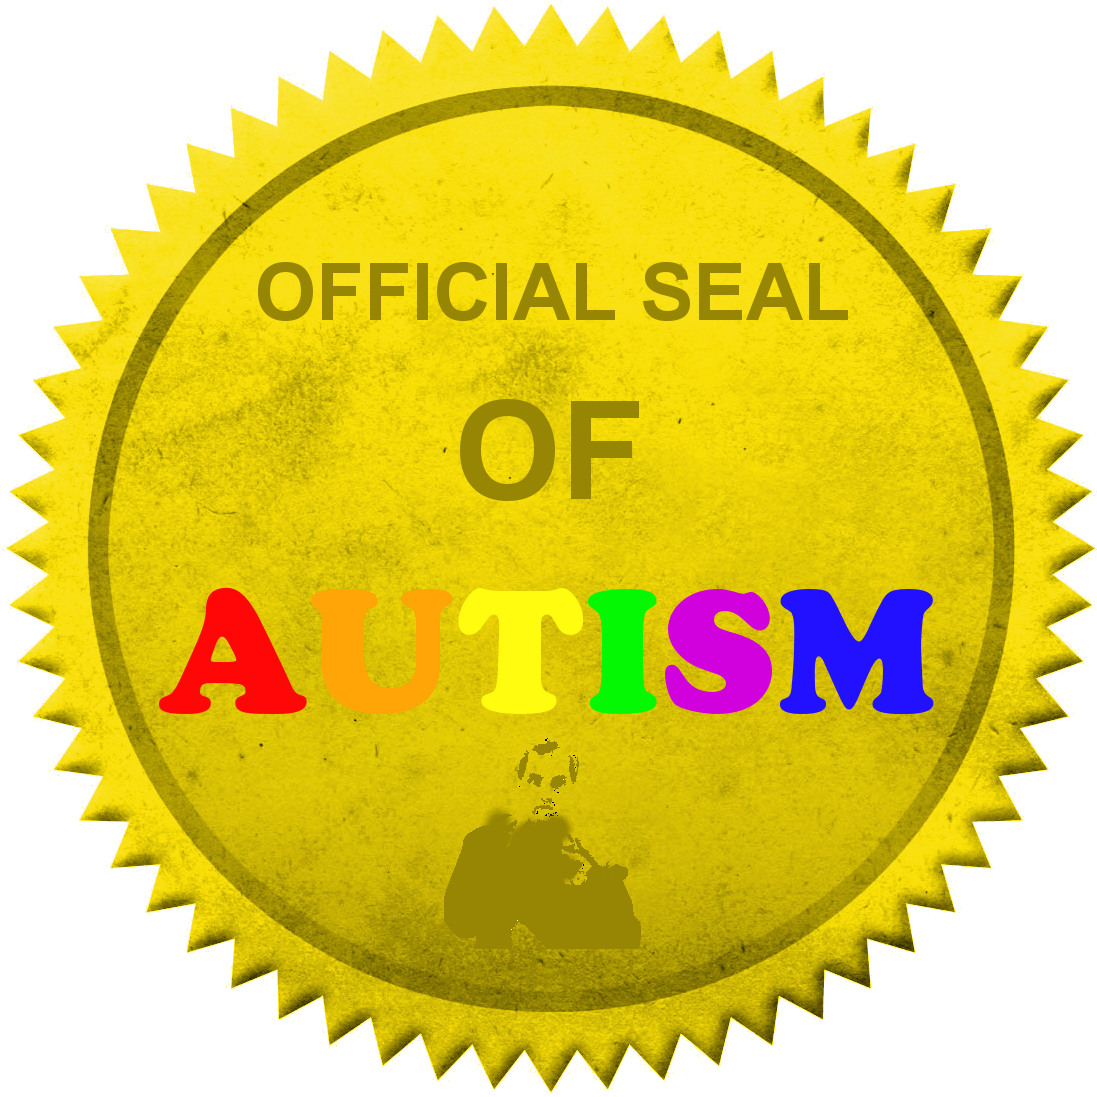 Official Seal Of Autism - Uttarakhand Open University Haldwani (1112x1115)